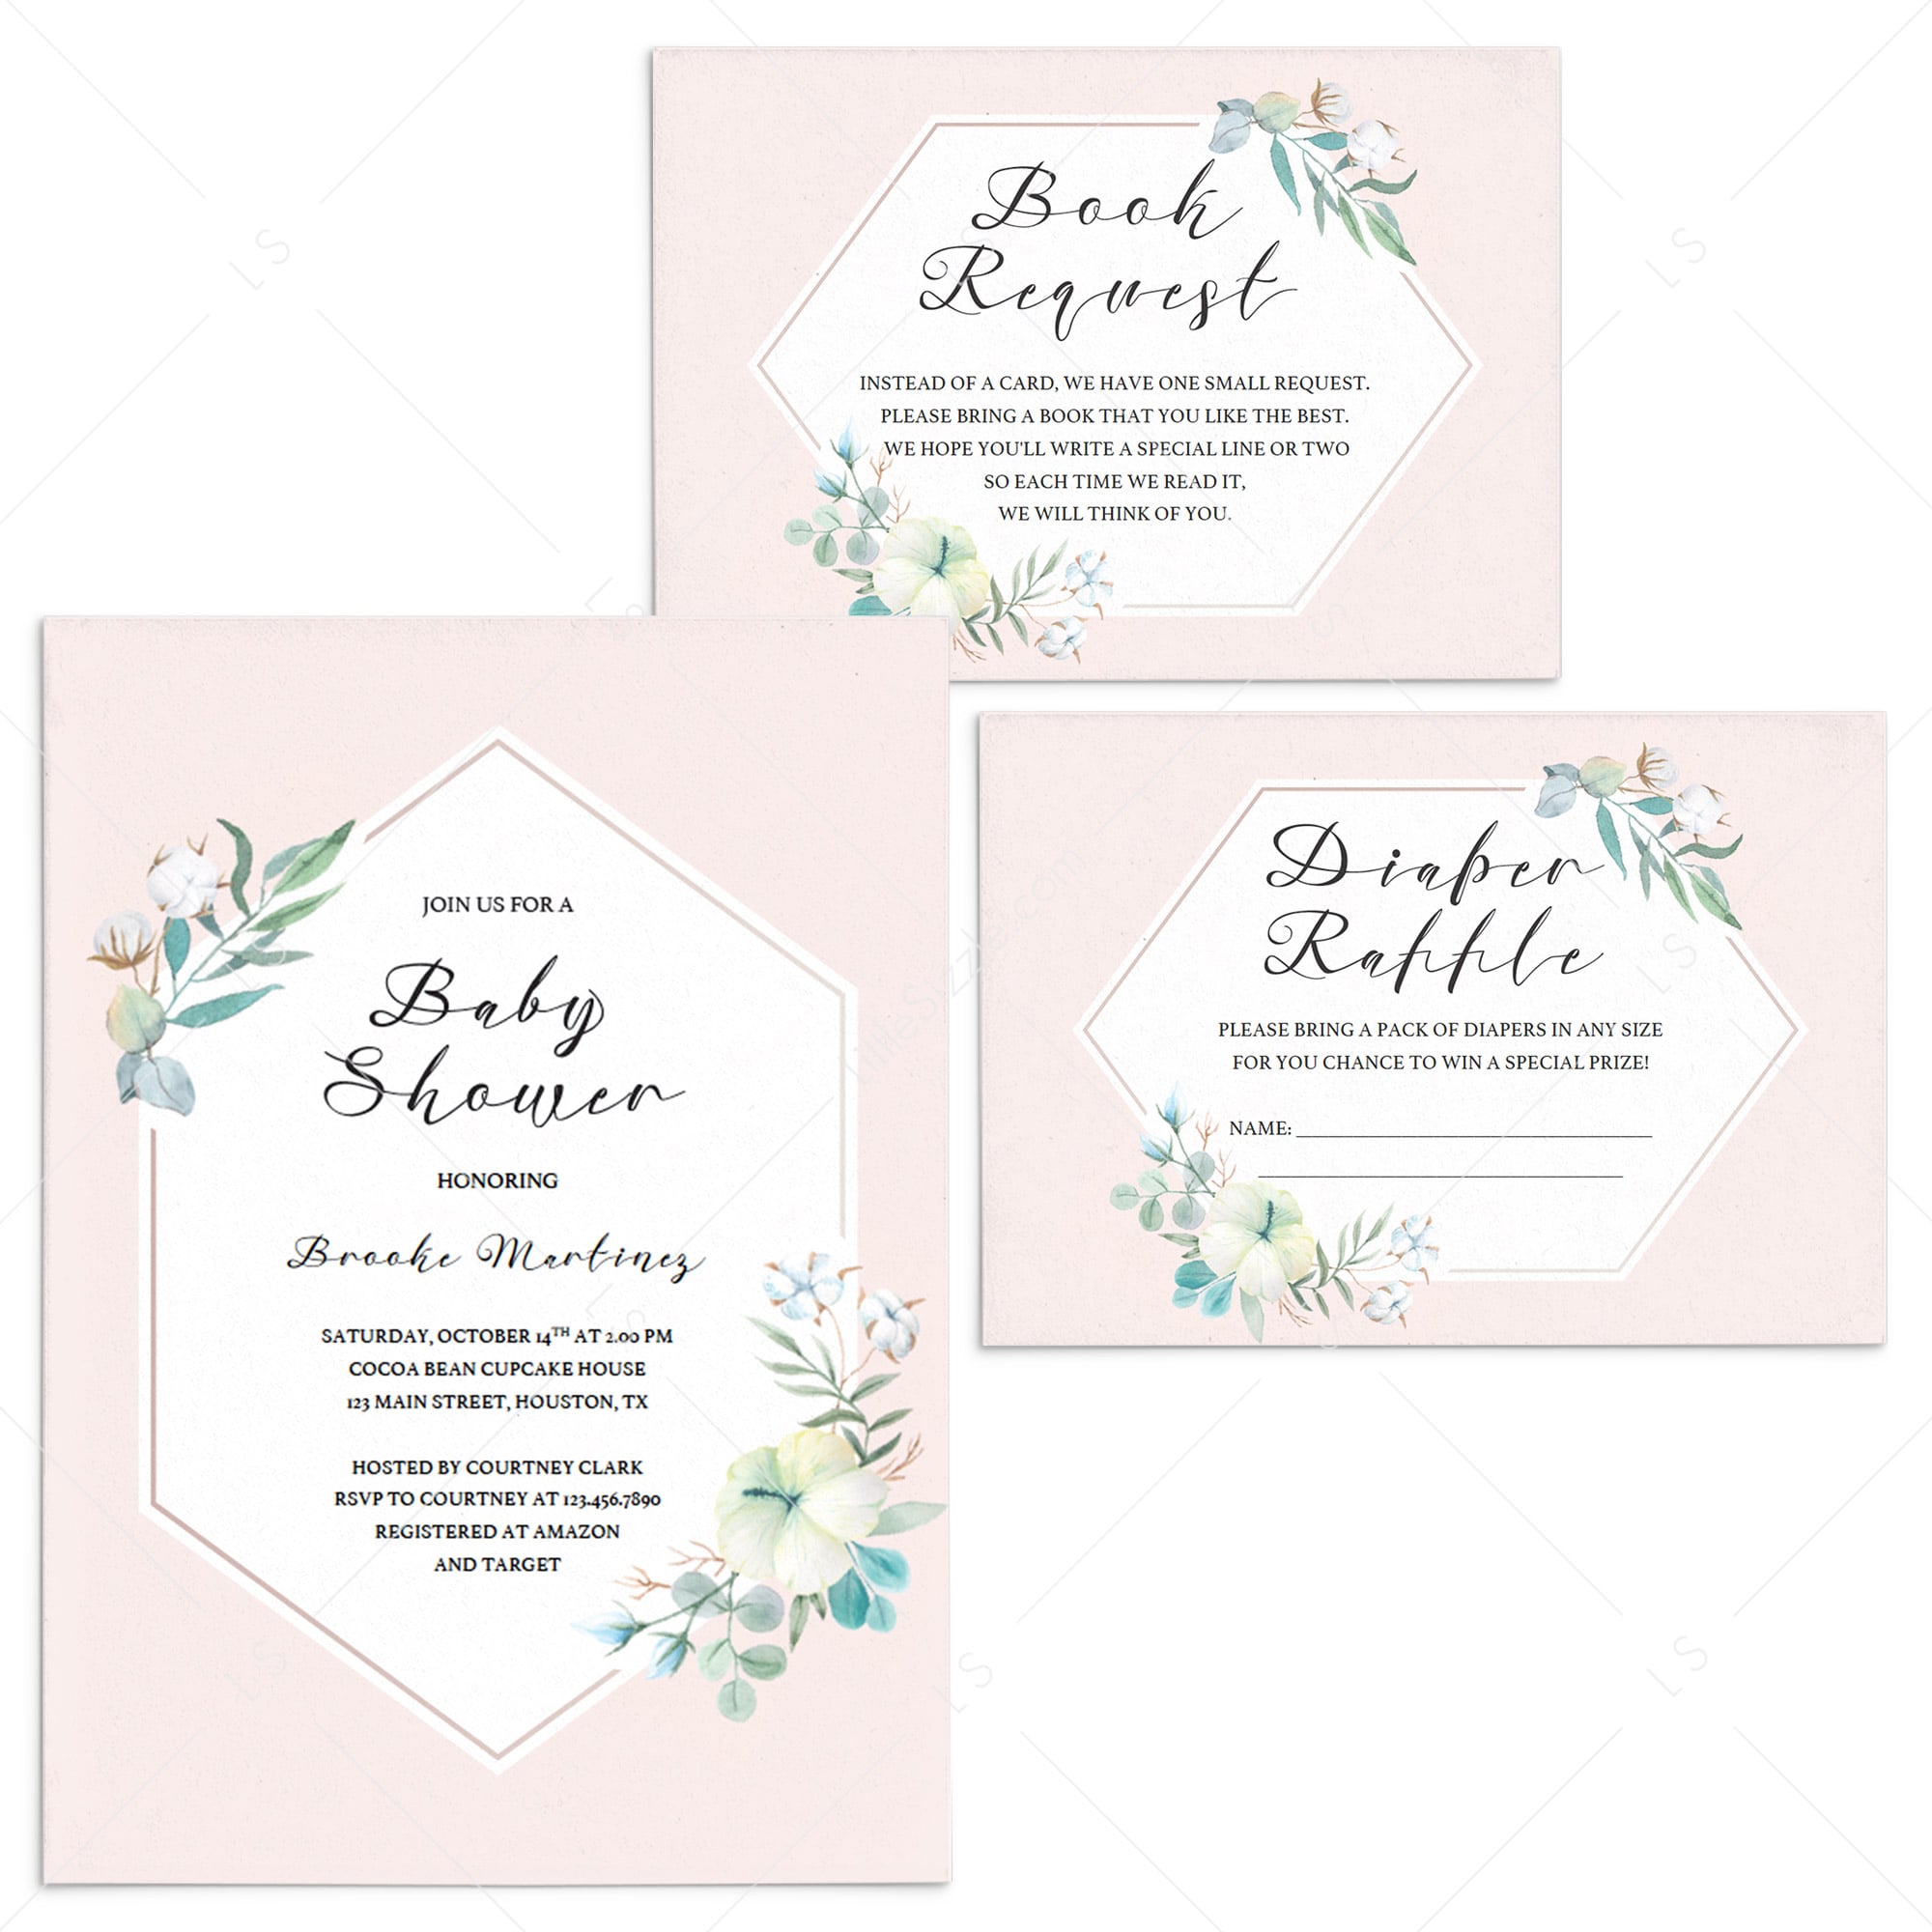 Blush and white baby shower invitation set by LittleSizzle